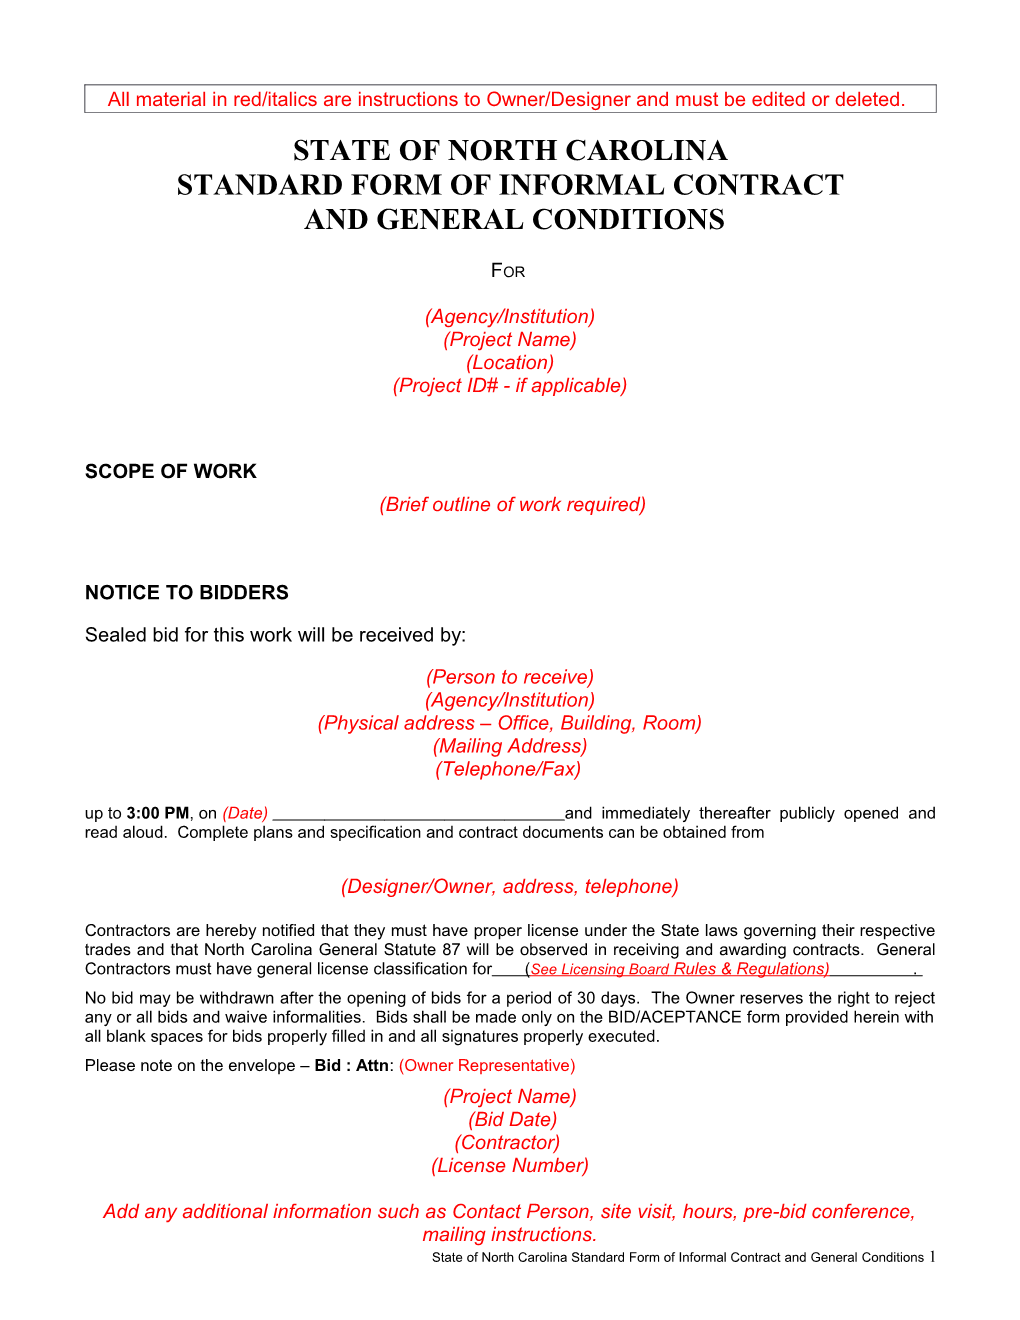 Standard Form of Informal Contract